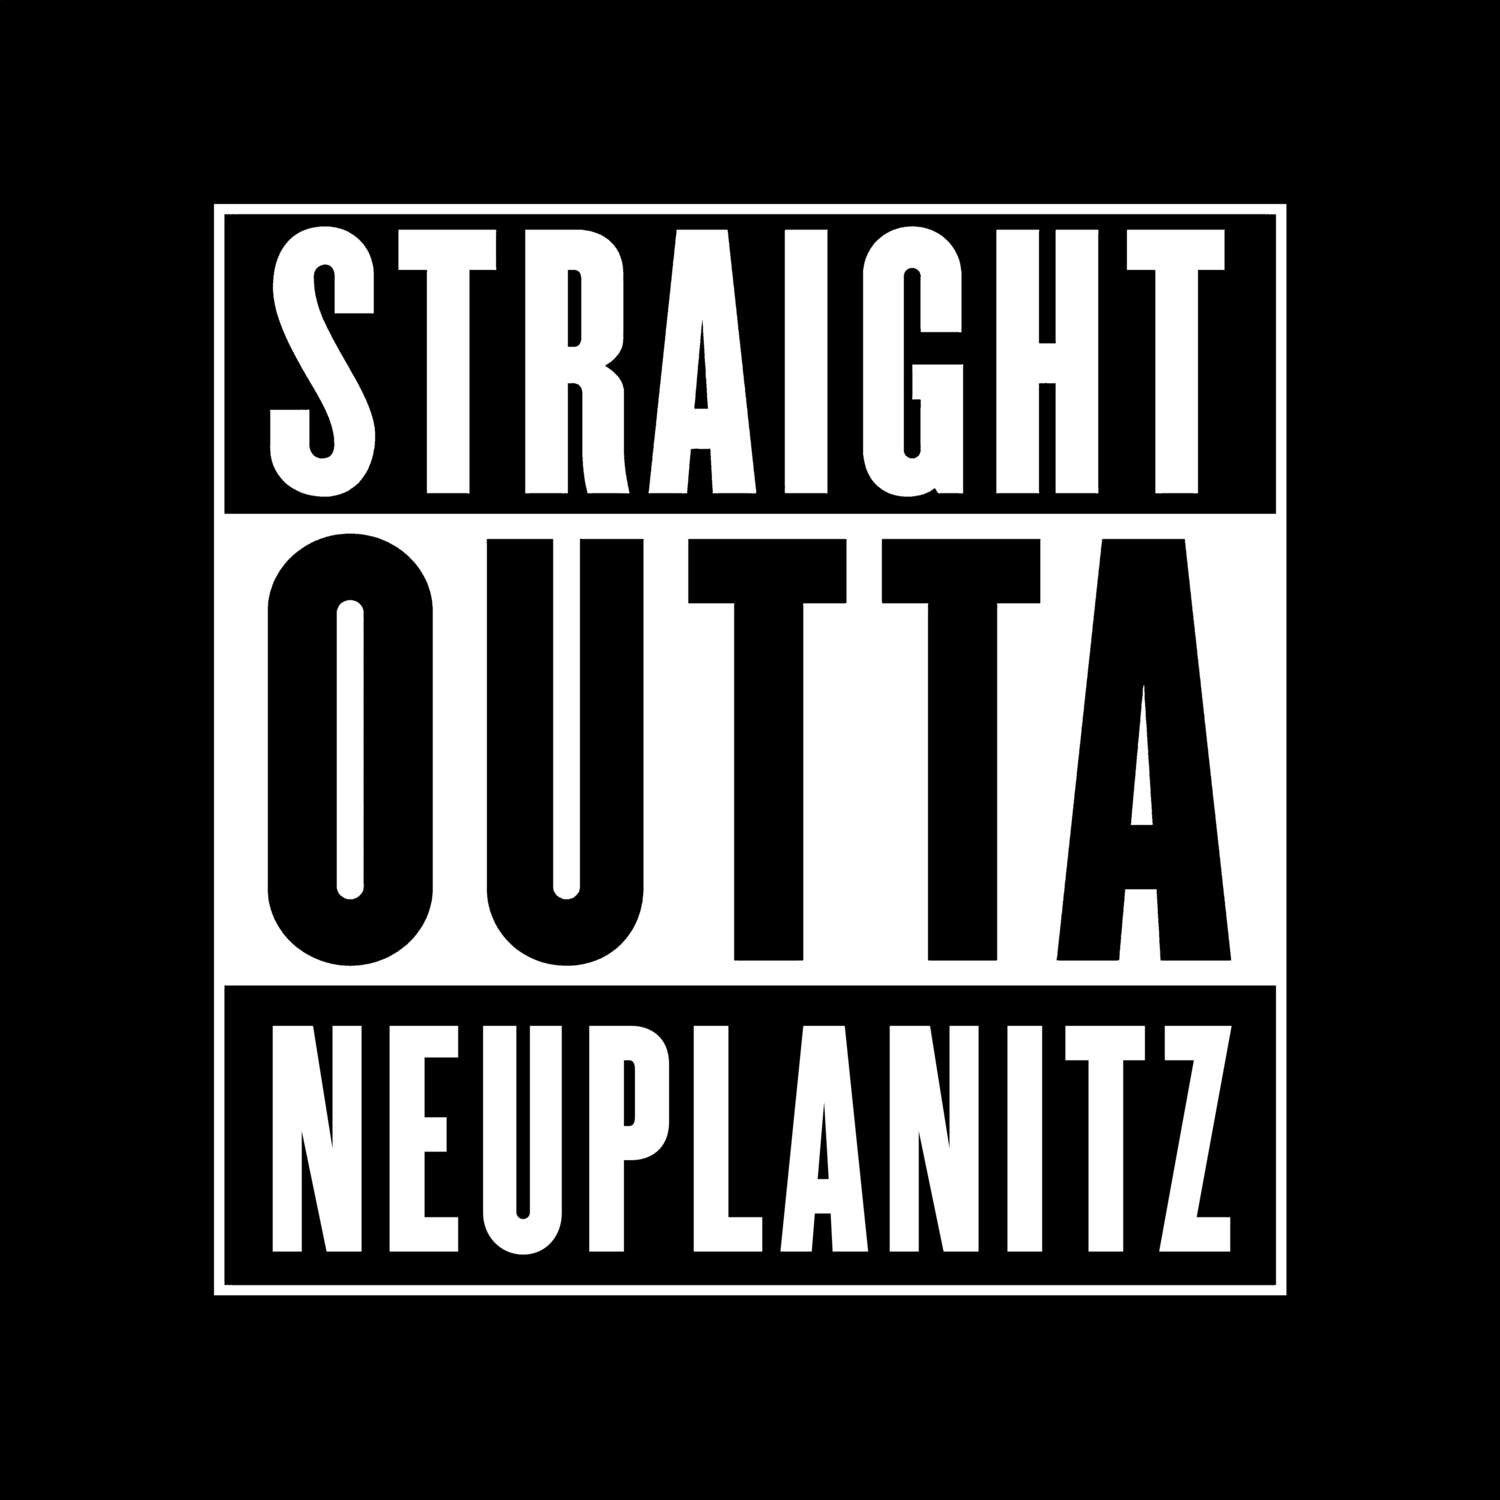 Neuplanitz T-Shirt »Straight Outta«